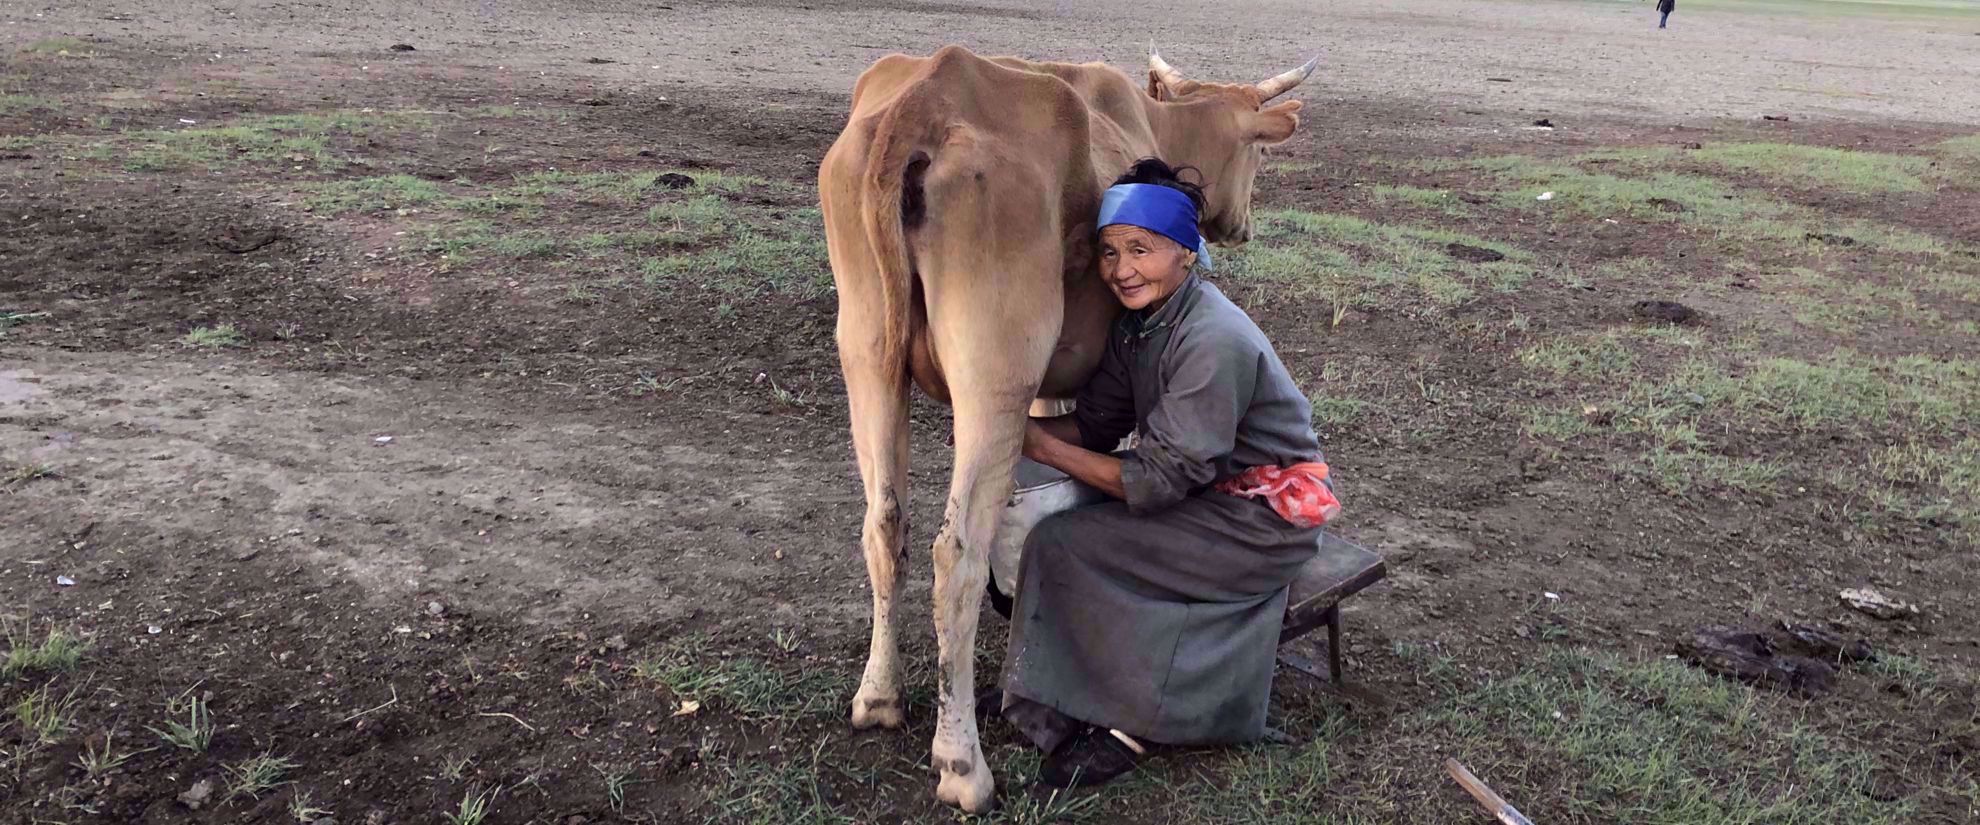 local woman milks cow mongolia